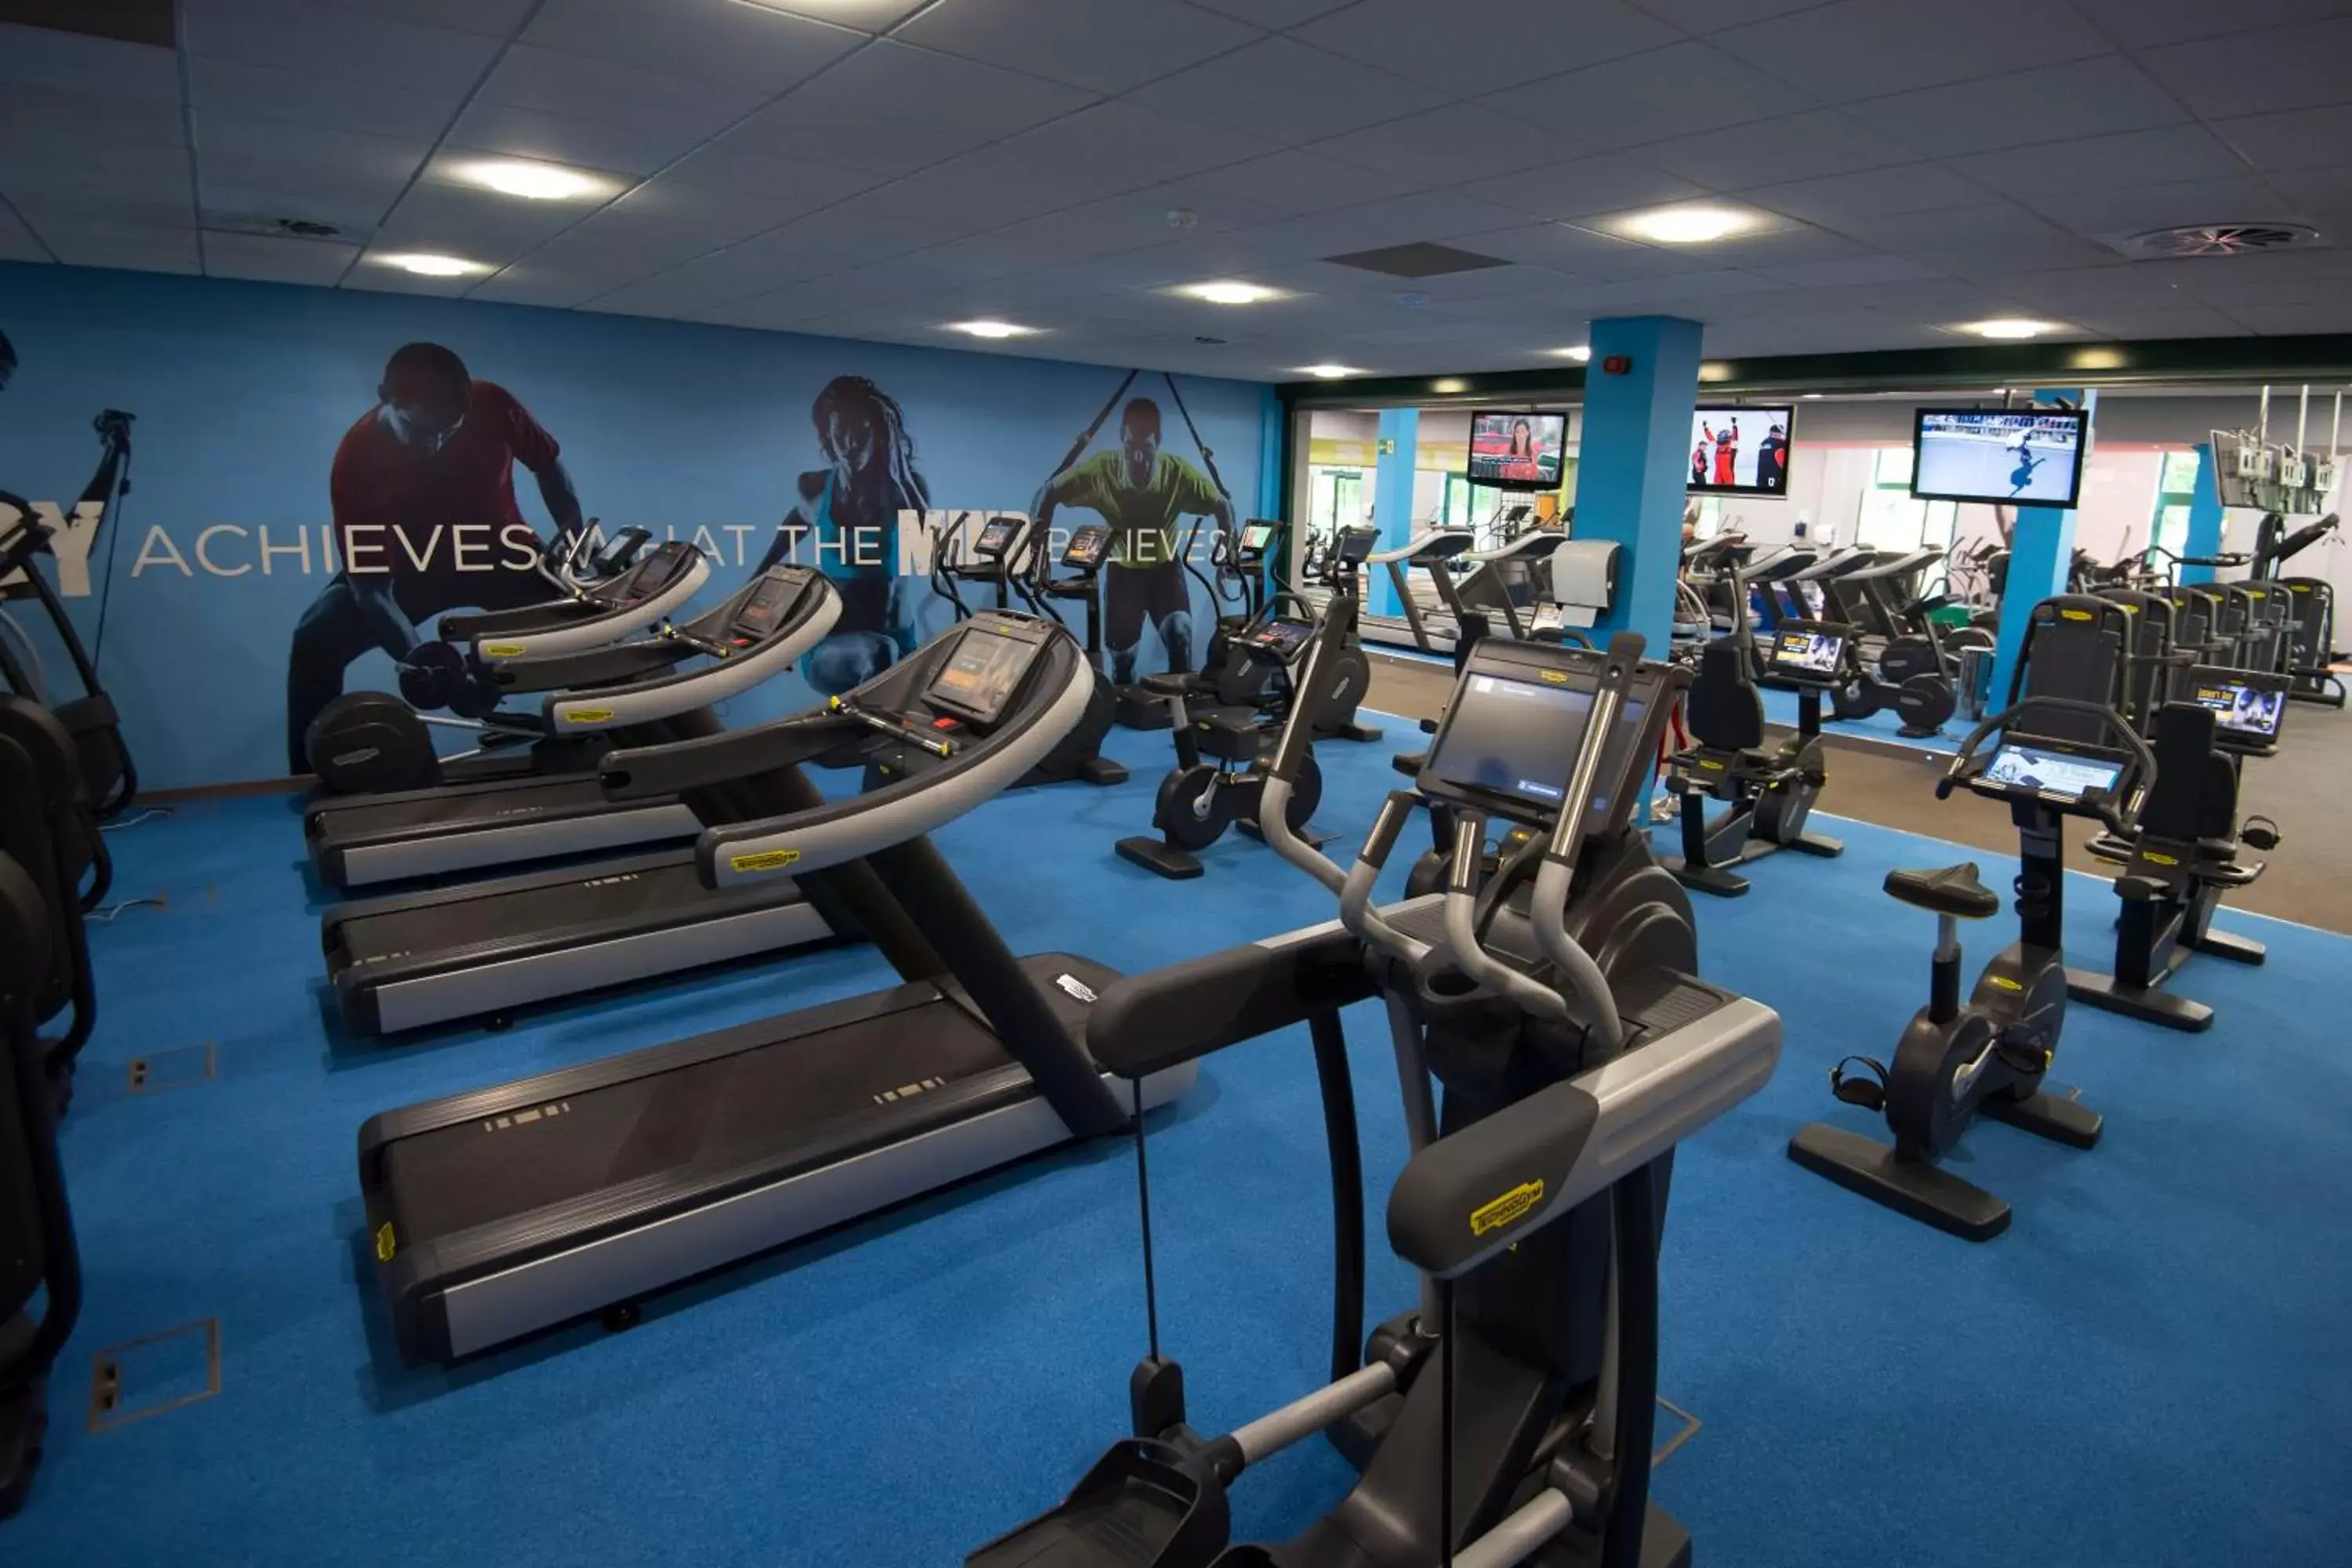 Fitness centre/facilities, Fitness Center/Facilities in Vale Resort